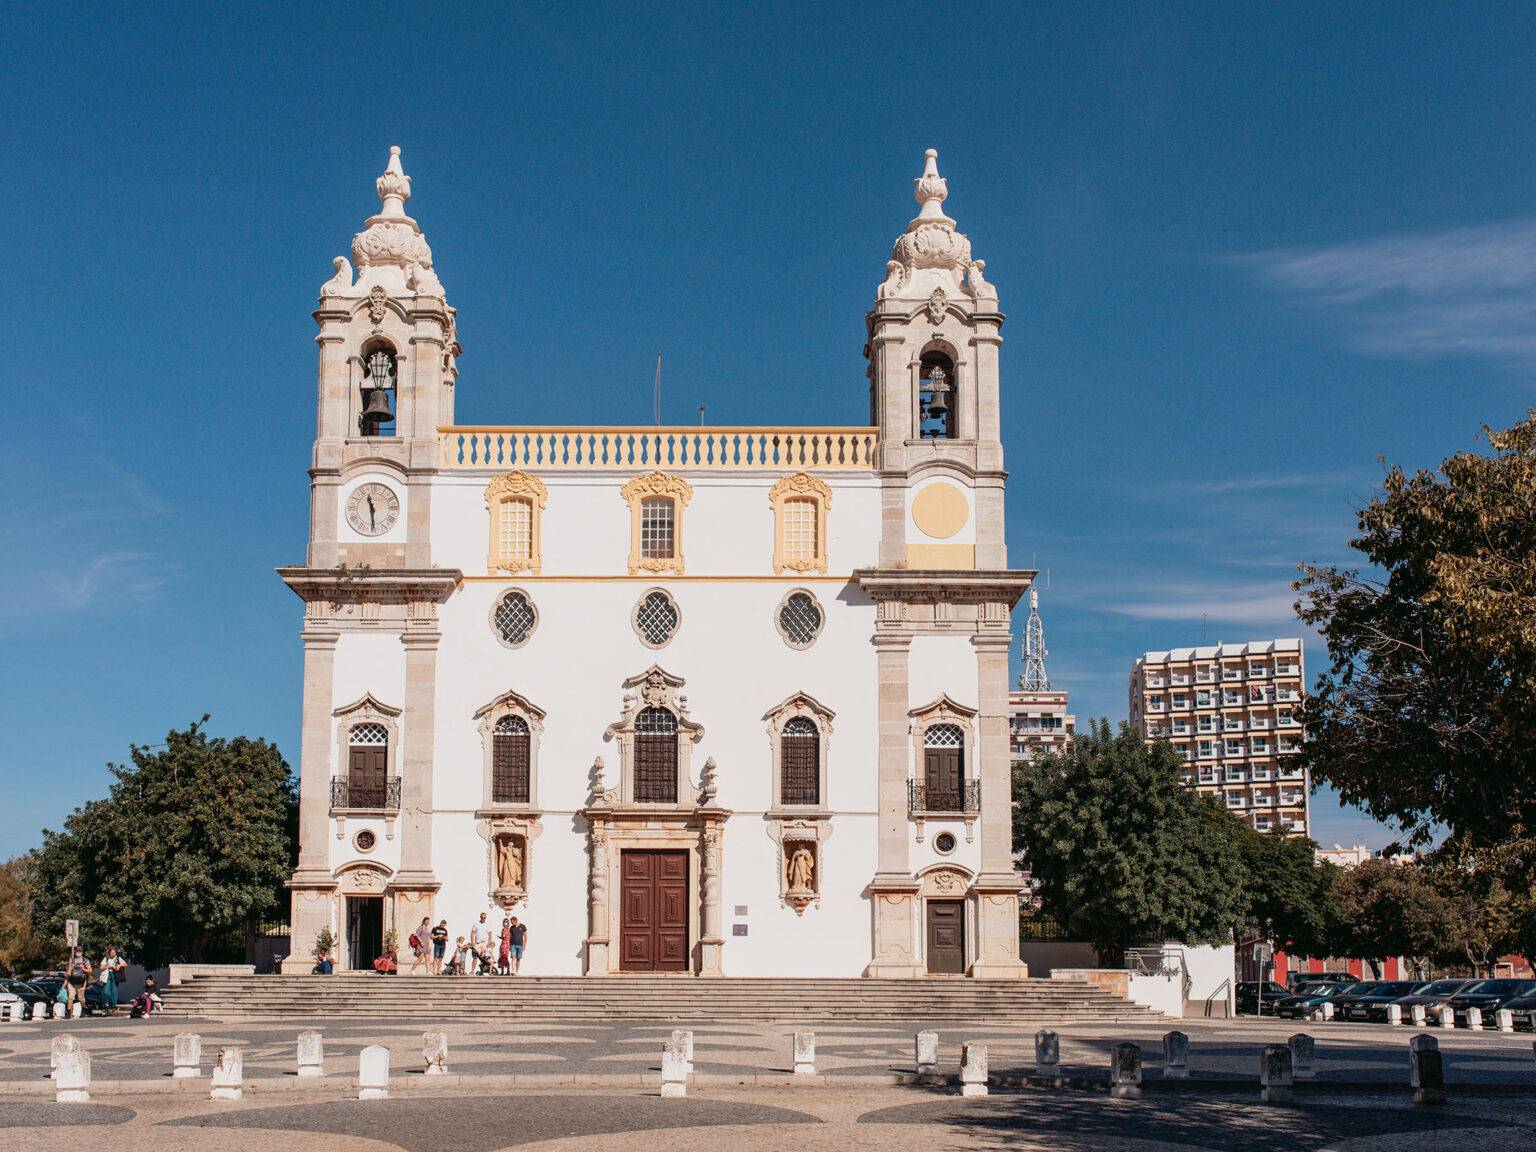 Die barocke weißfarbene Kirche "Igreja do Carmo" mit 2 Türmen in Faro ragt in den blauen Himmel.